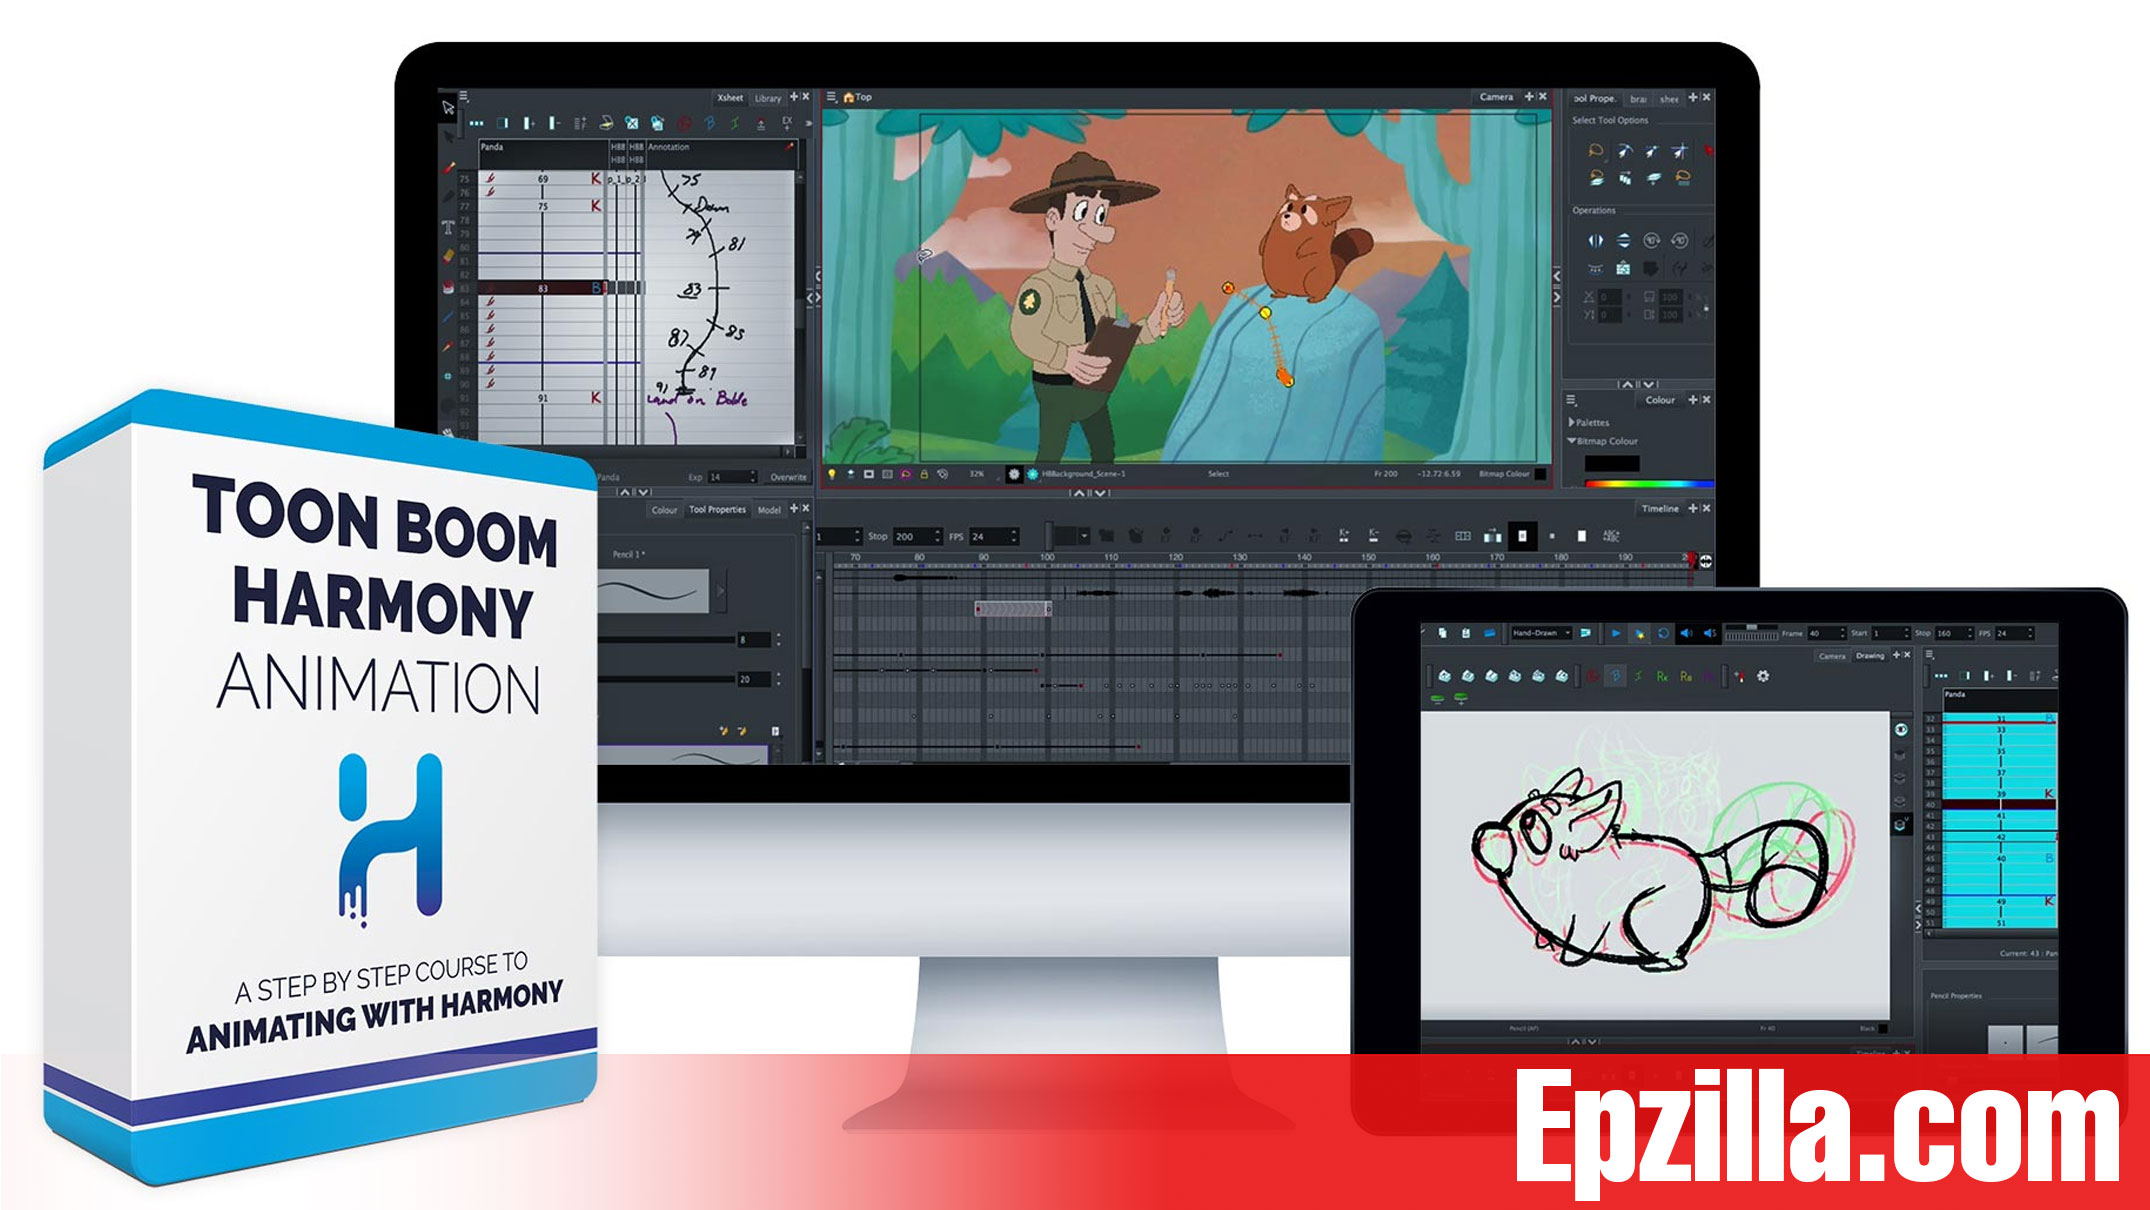 Bloop Animations Toon Boom Harmony Animation Free Download Epzilla.com